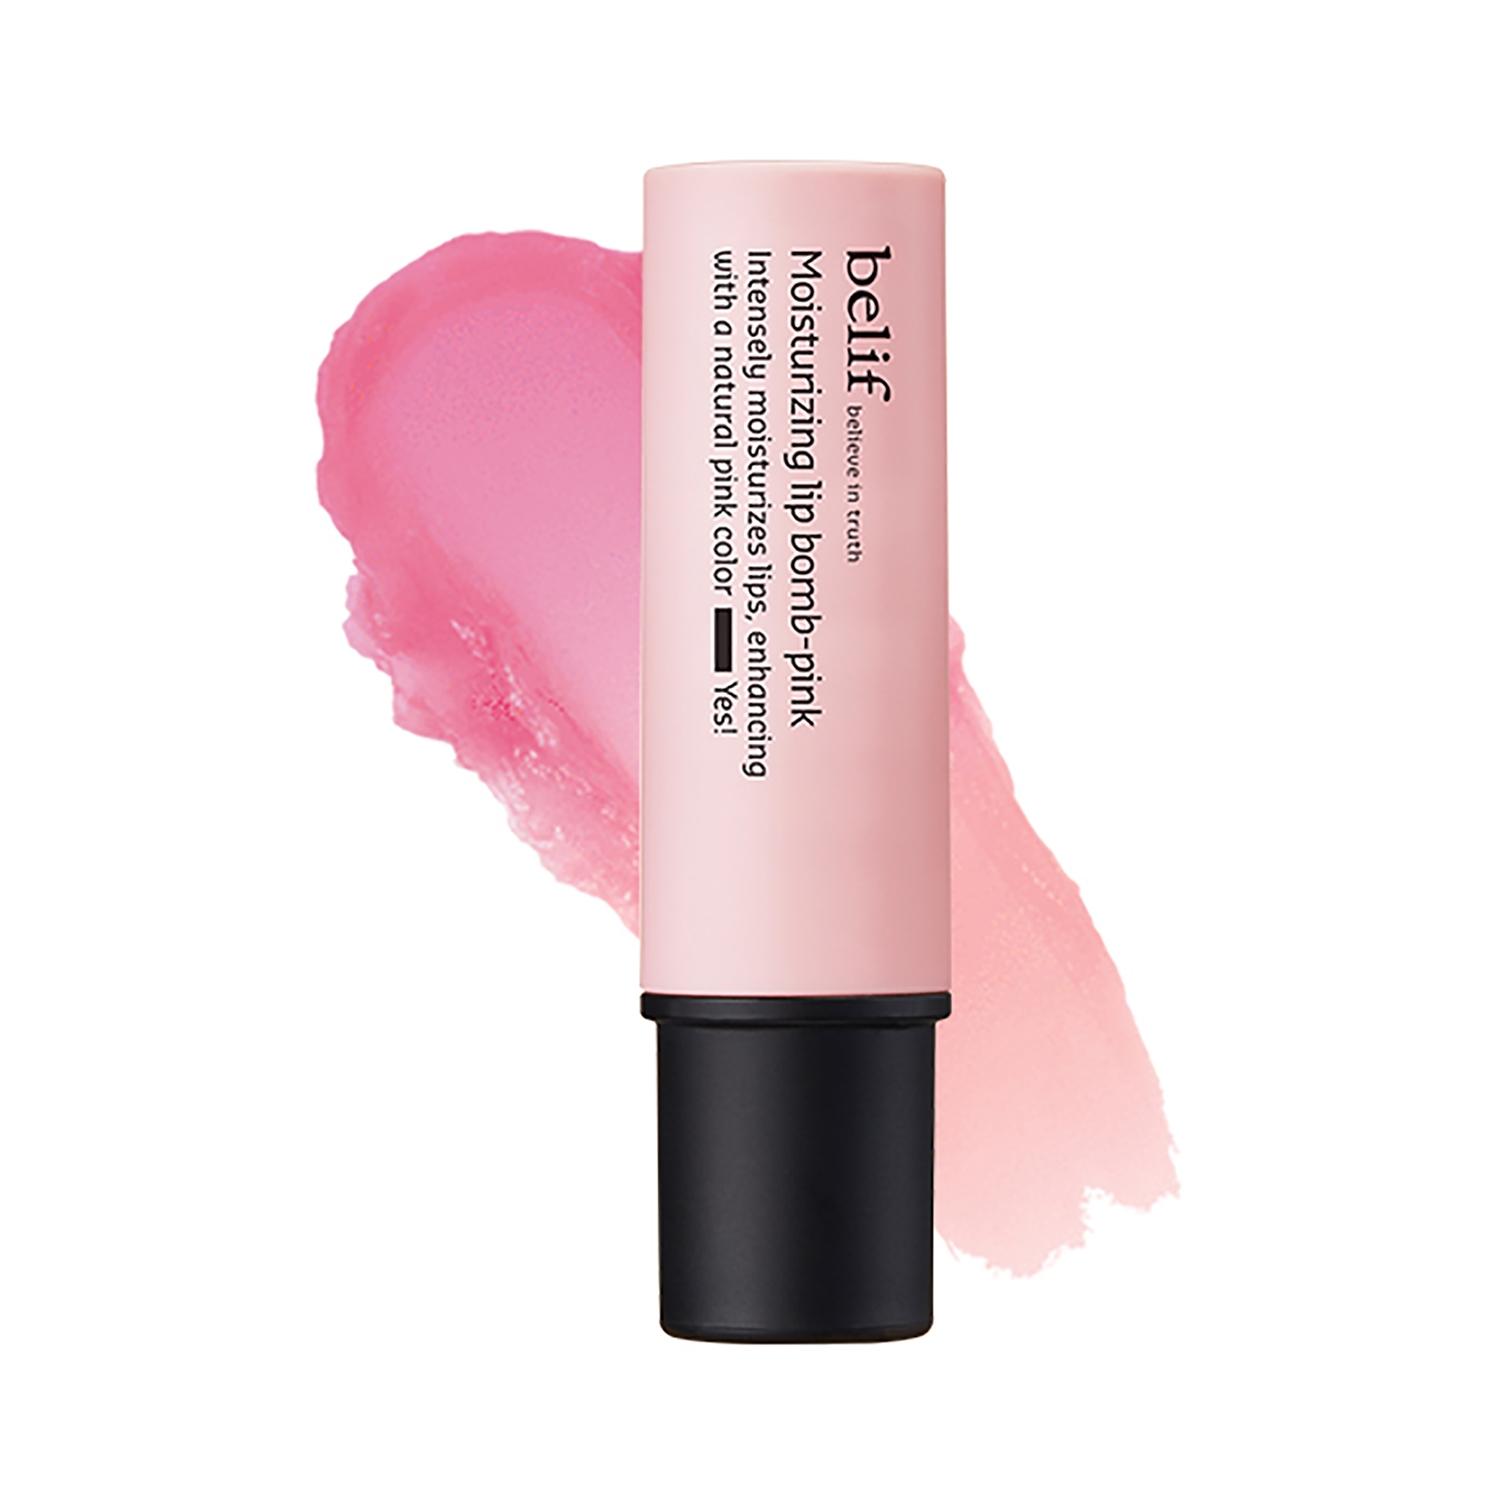 belif moisturizing lip bomb - pink (3g)